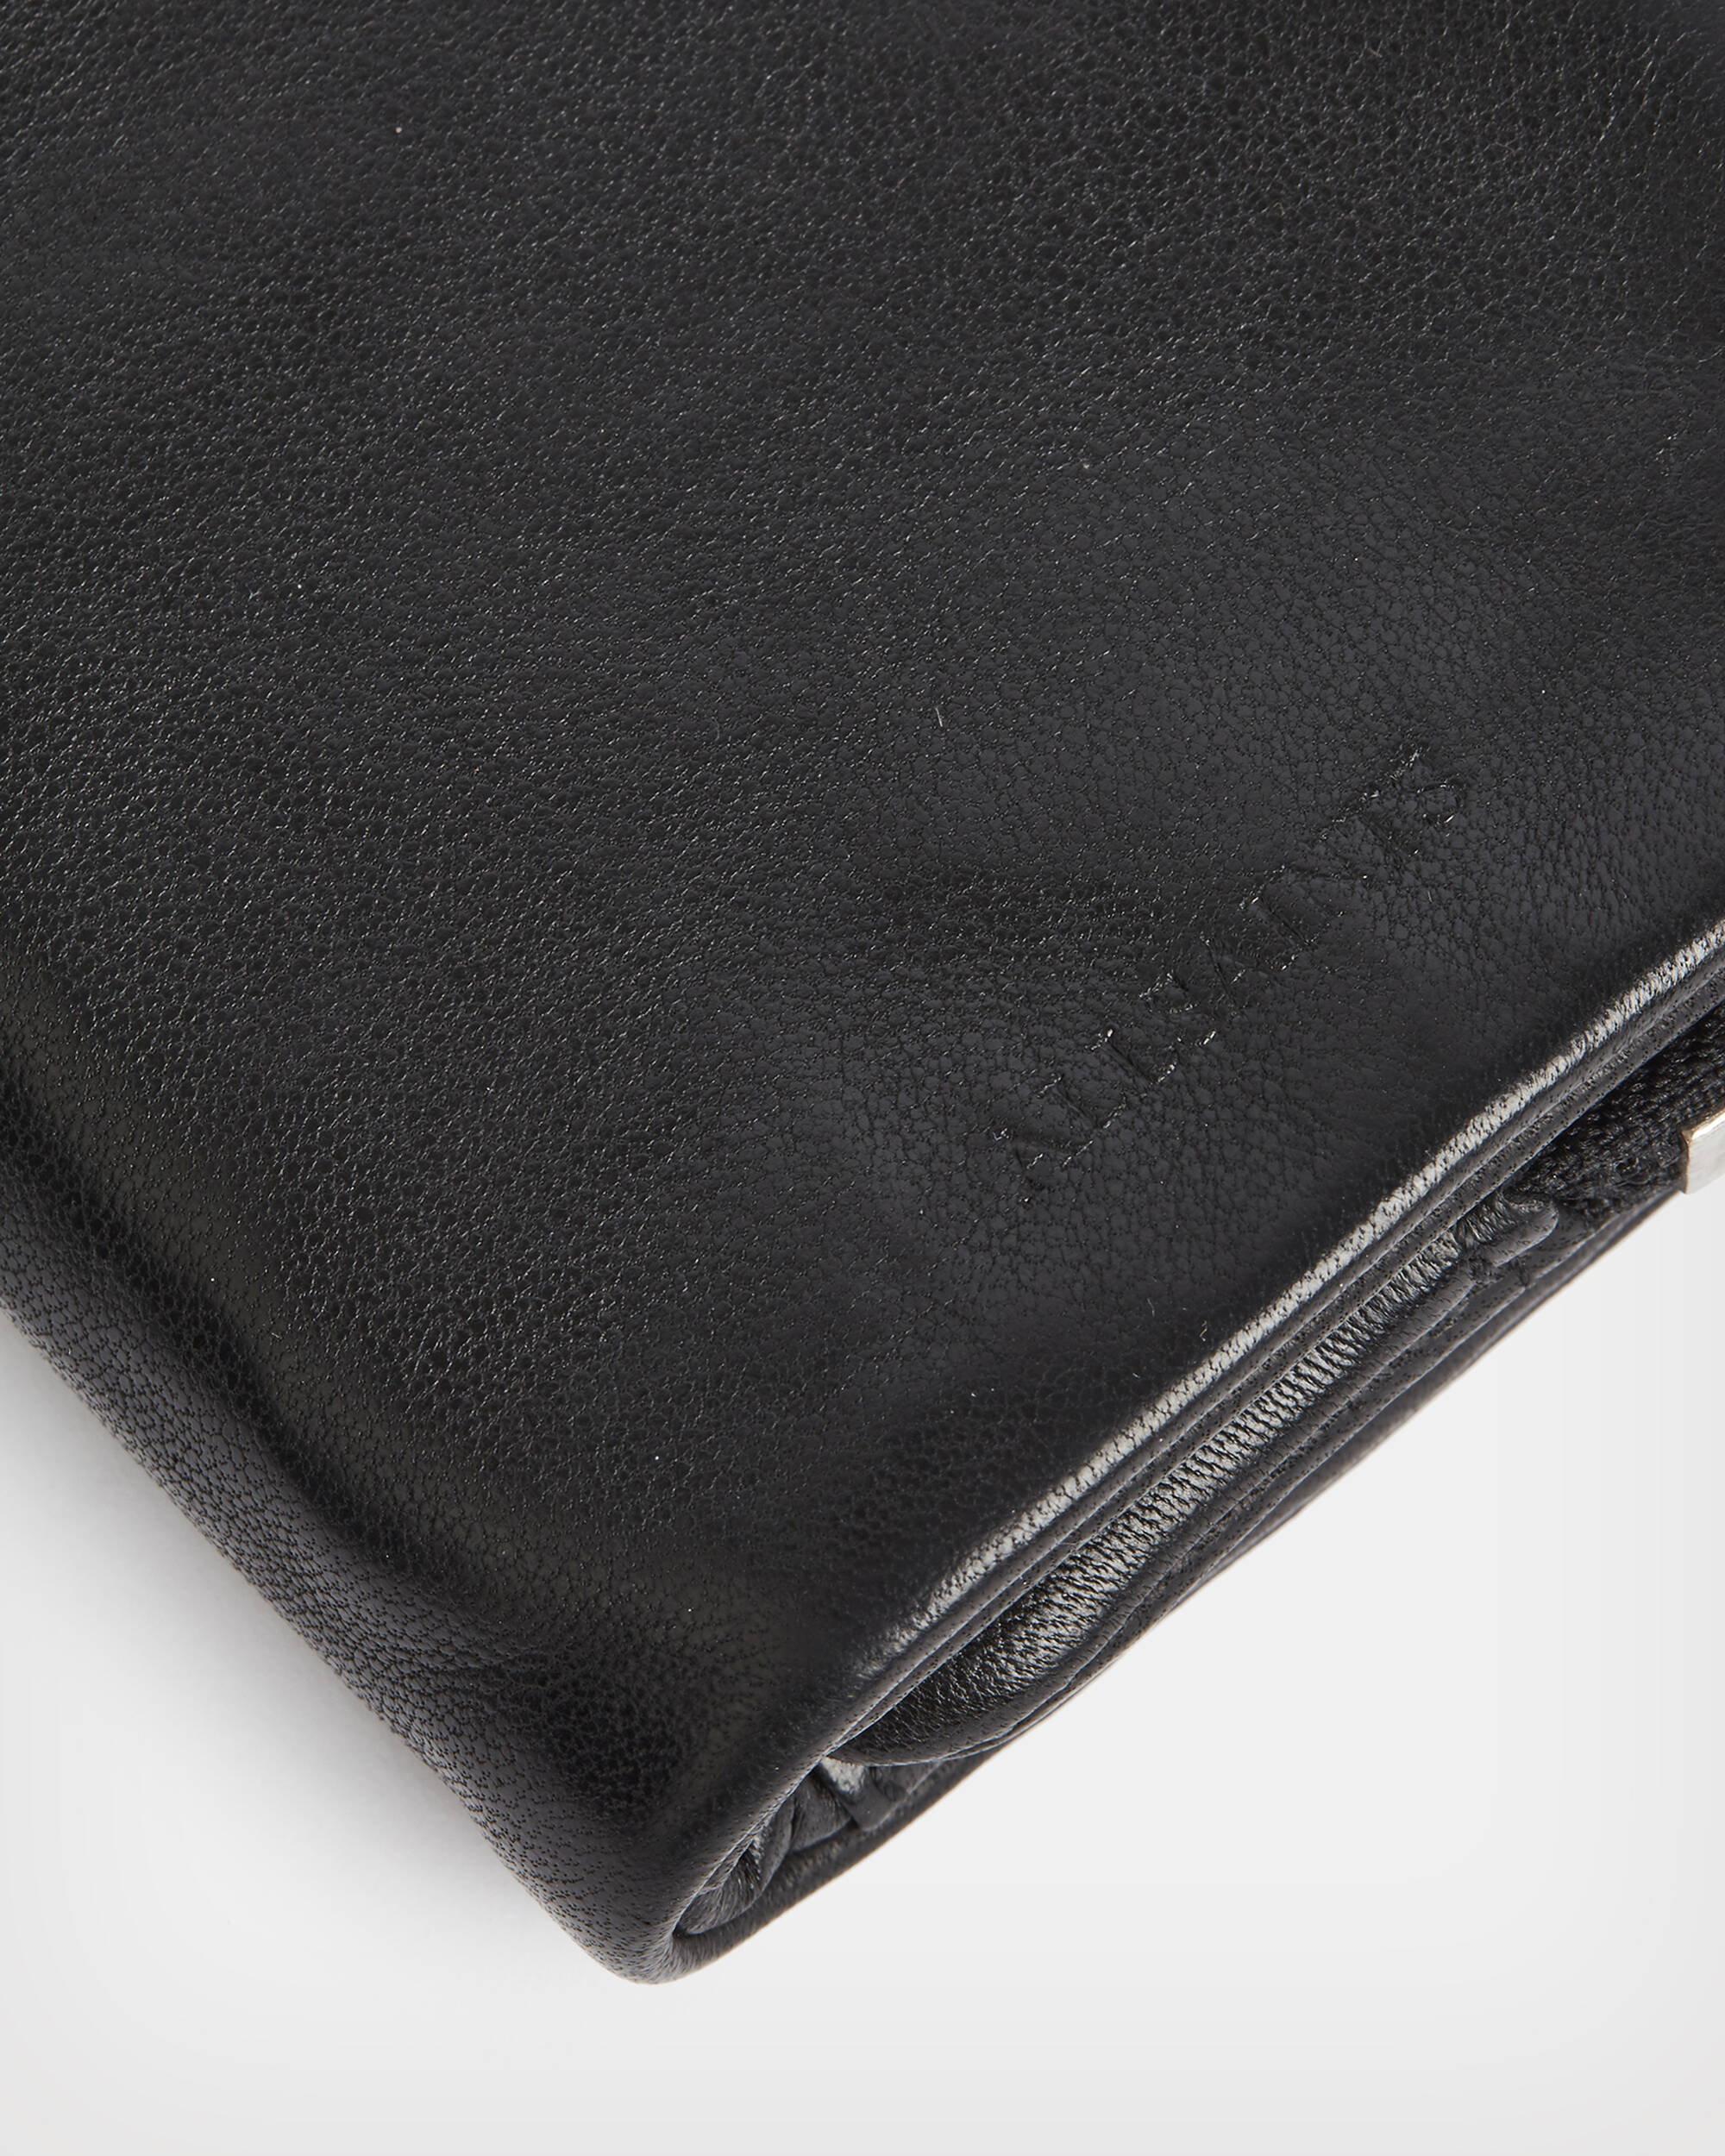 Junction Leather Wallet Black | ALLSAINTS